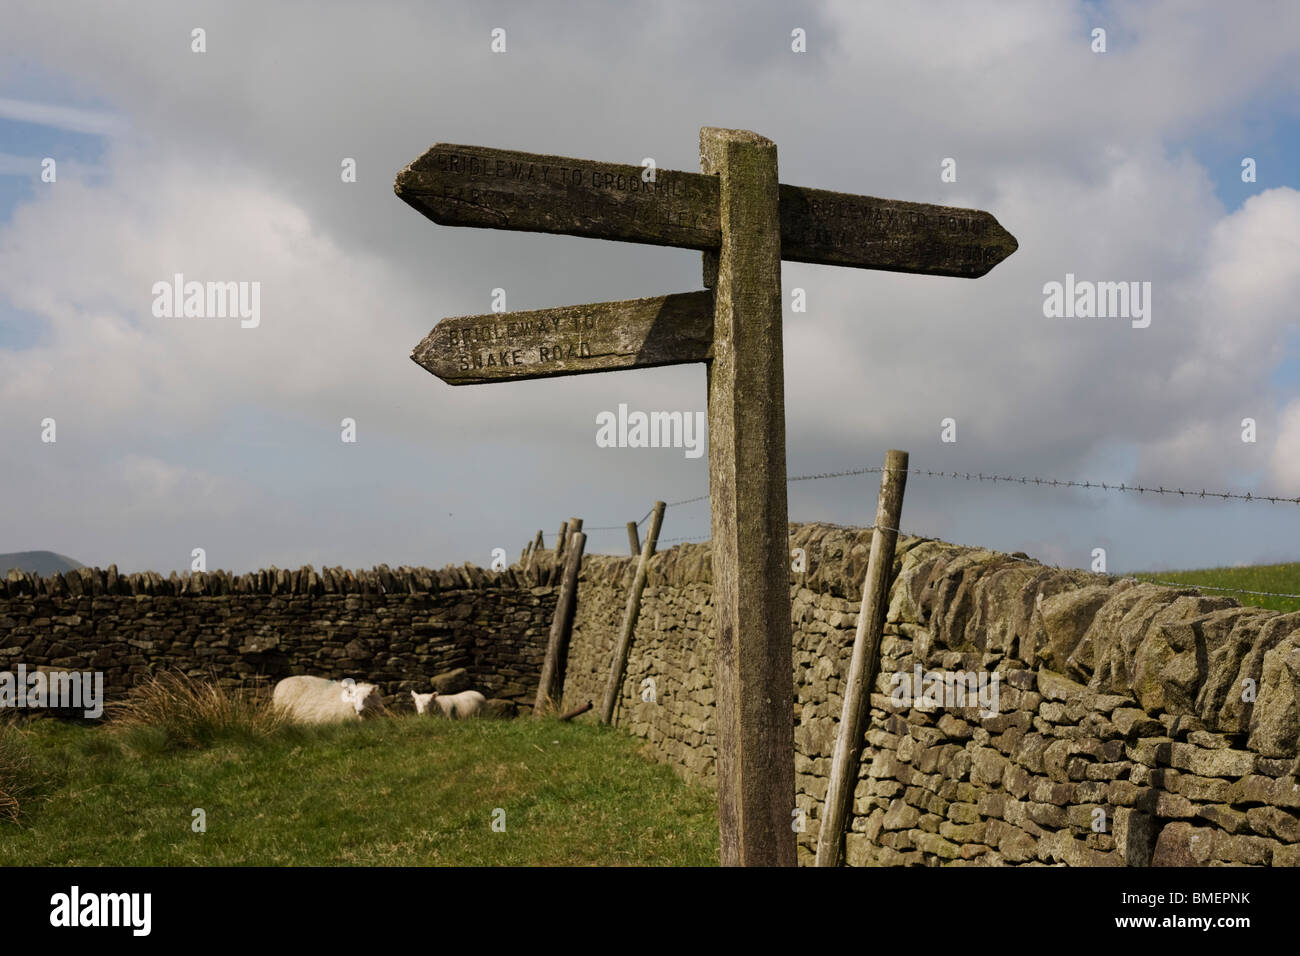 Footpath sign in Crook Hill, near Ladybower Reservoir, Peak District National Park, Derbyshire. Stock Photo